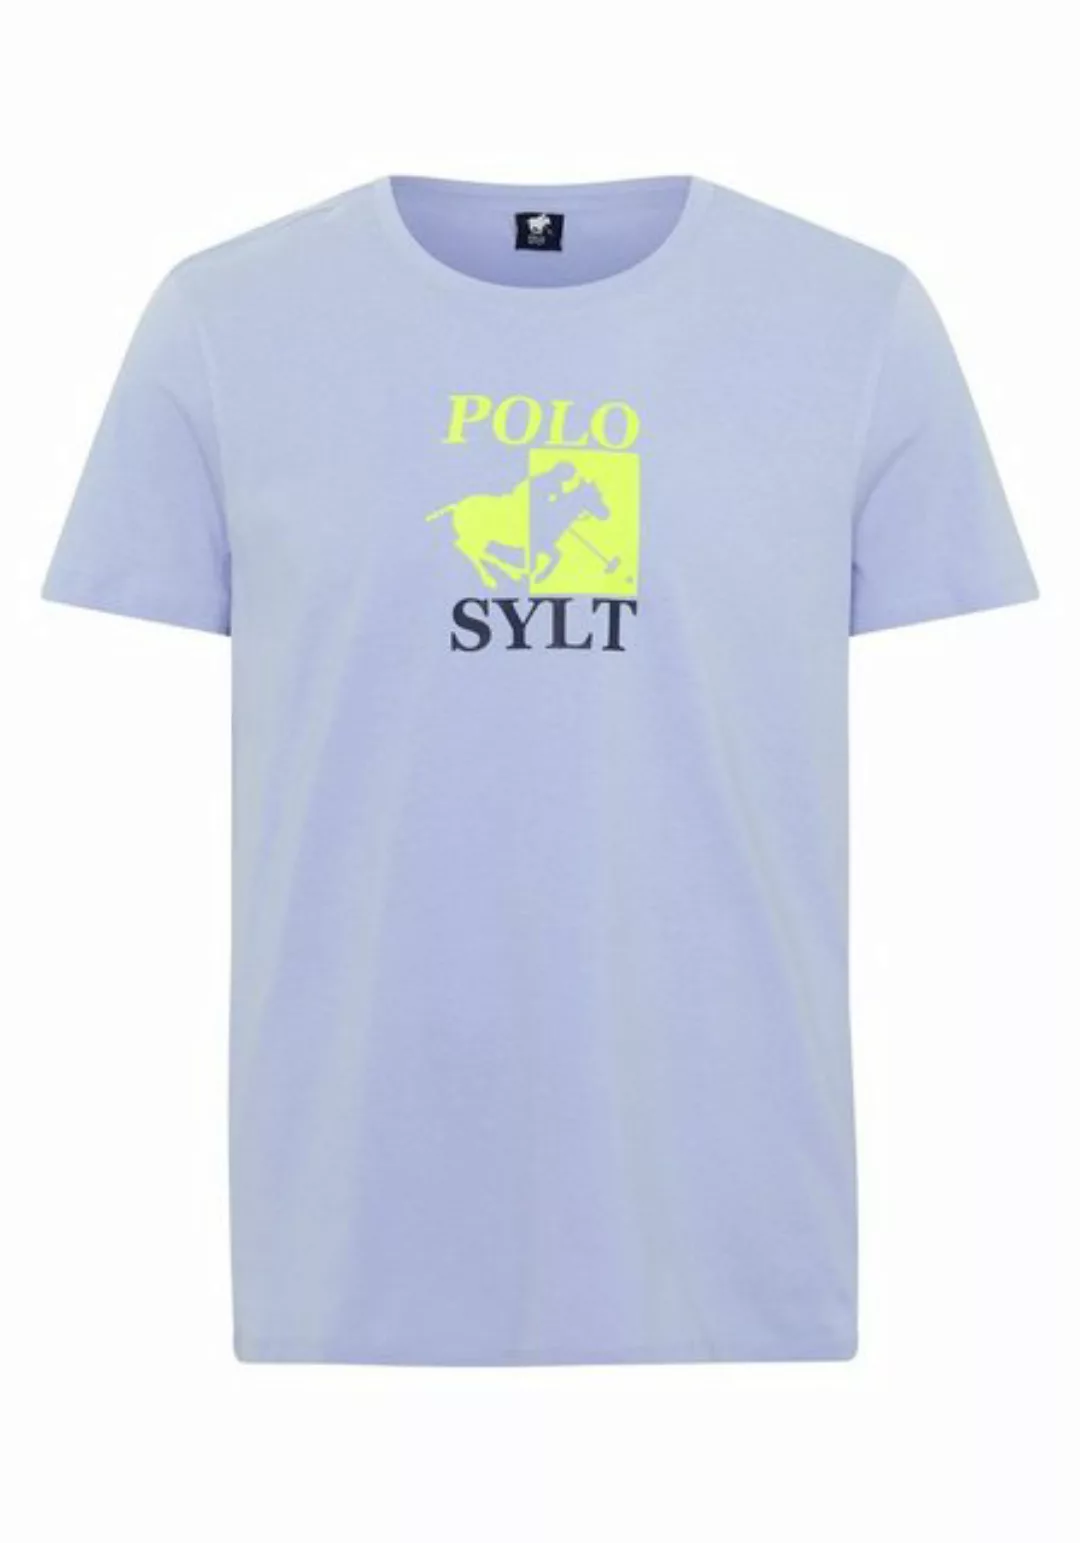 Polo Sylt Print-Shirt mit Logo-Print günstig online kaufen